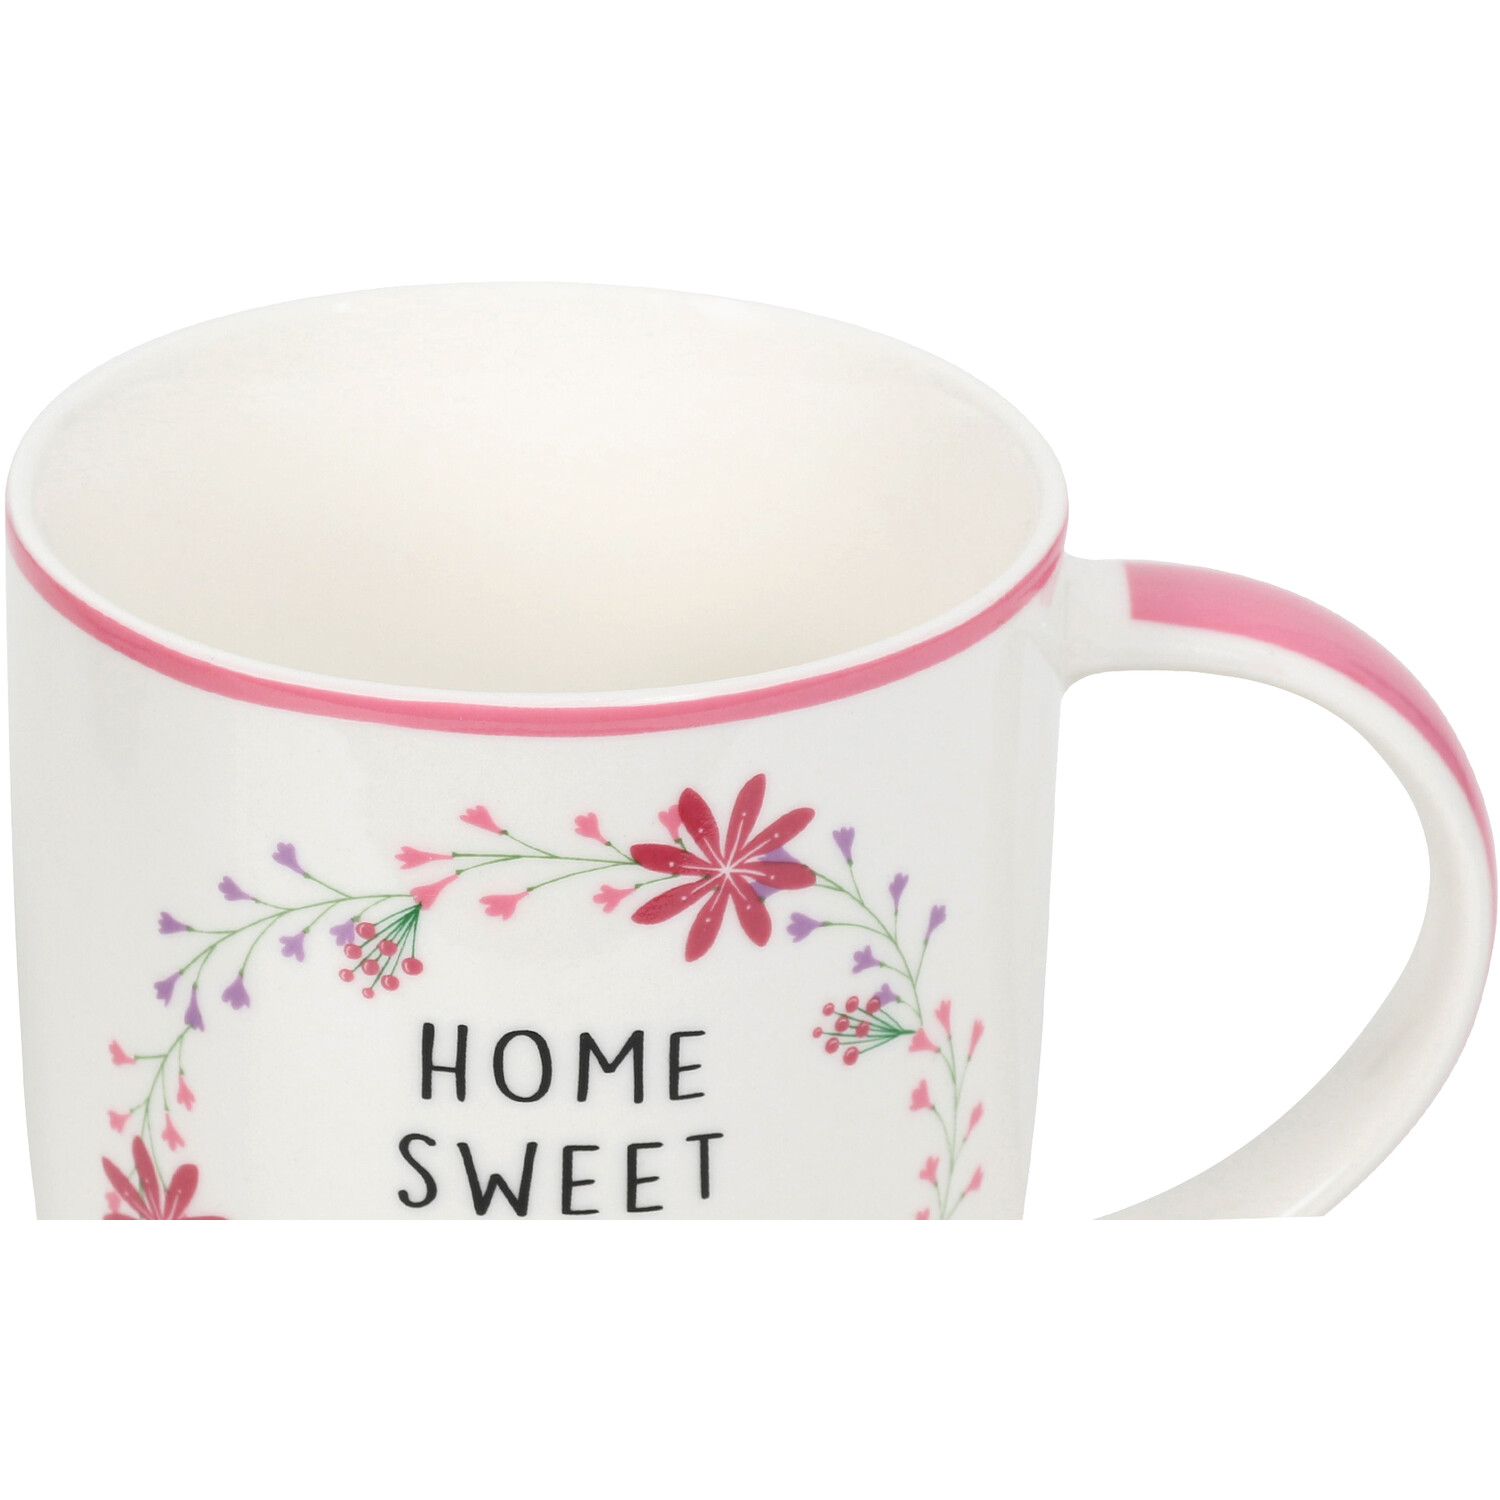 Home Sweet Home Office Mug - Pink Image 3